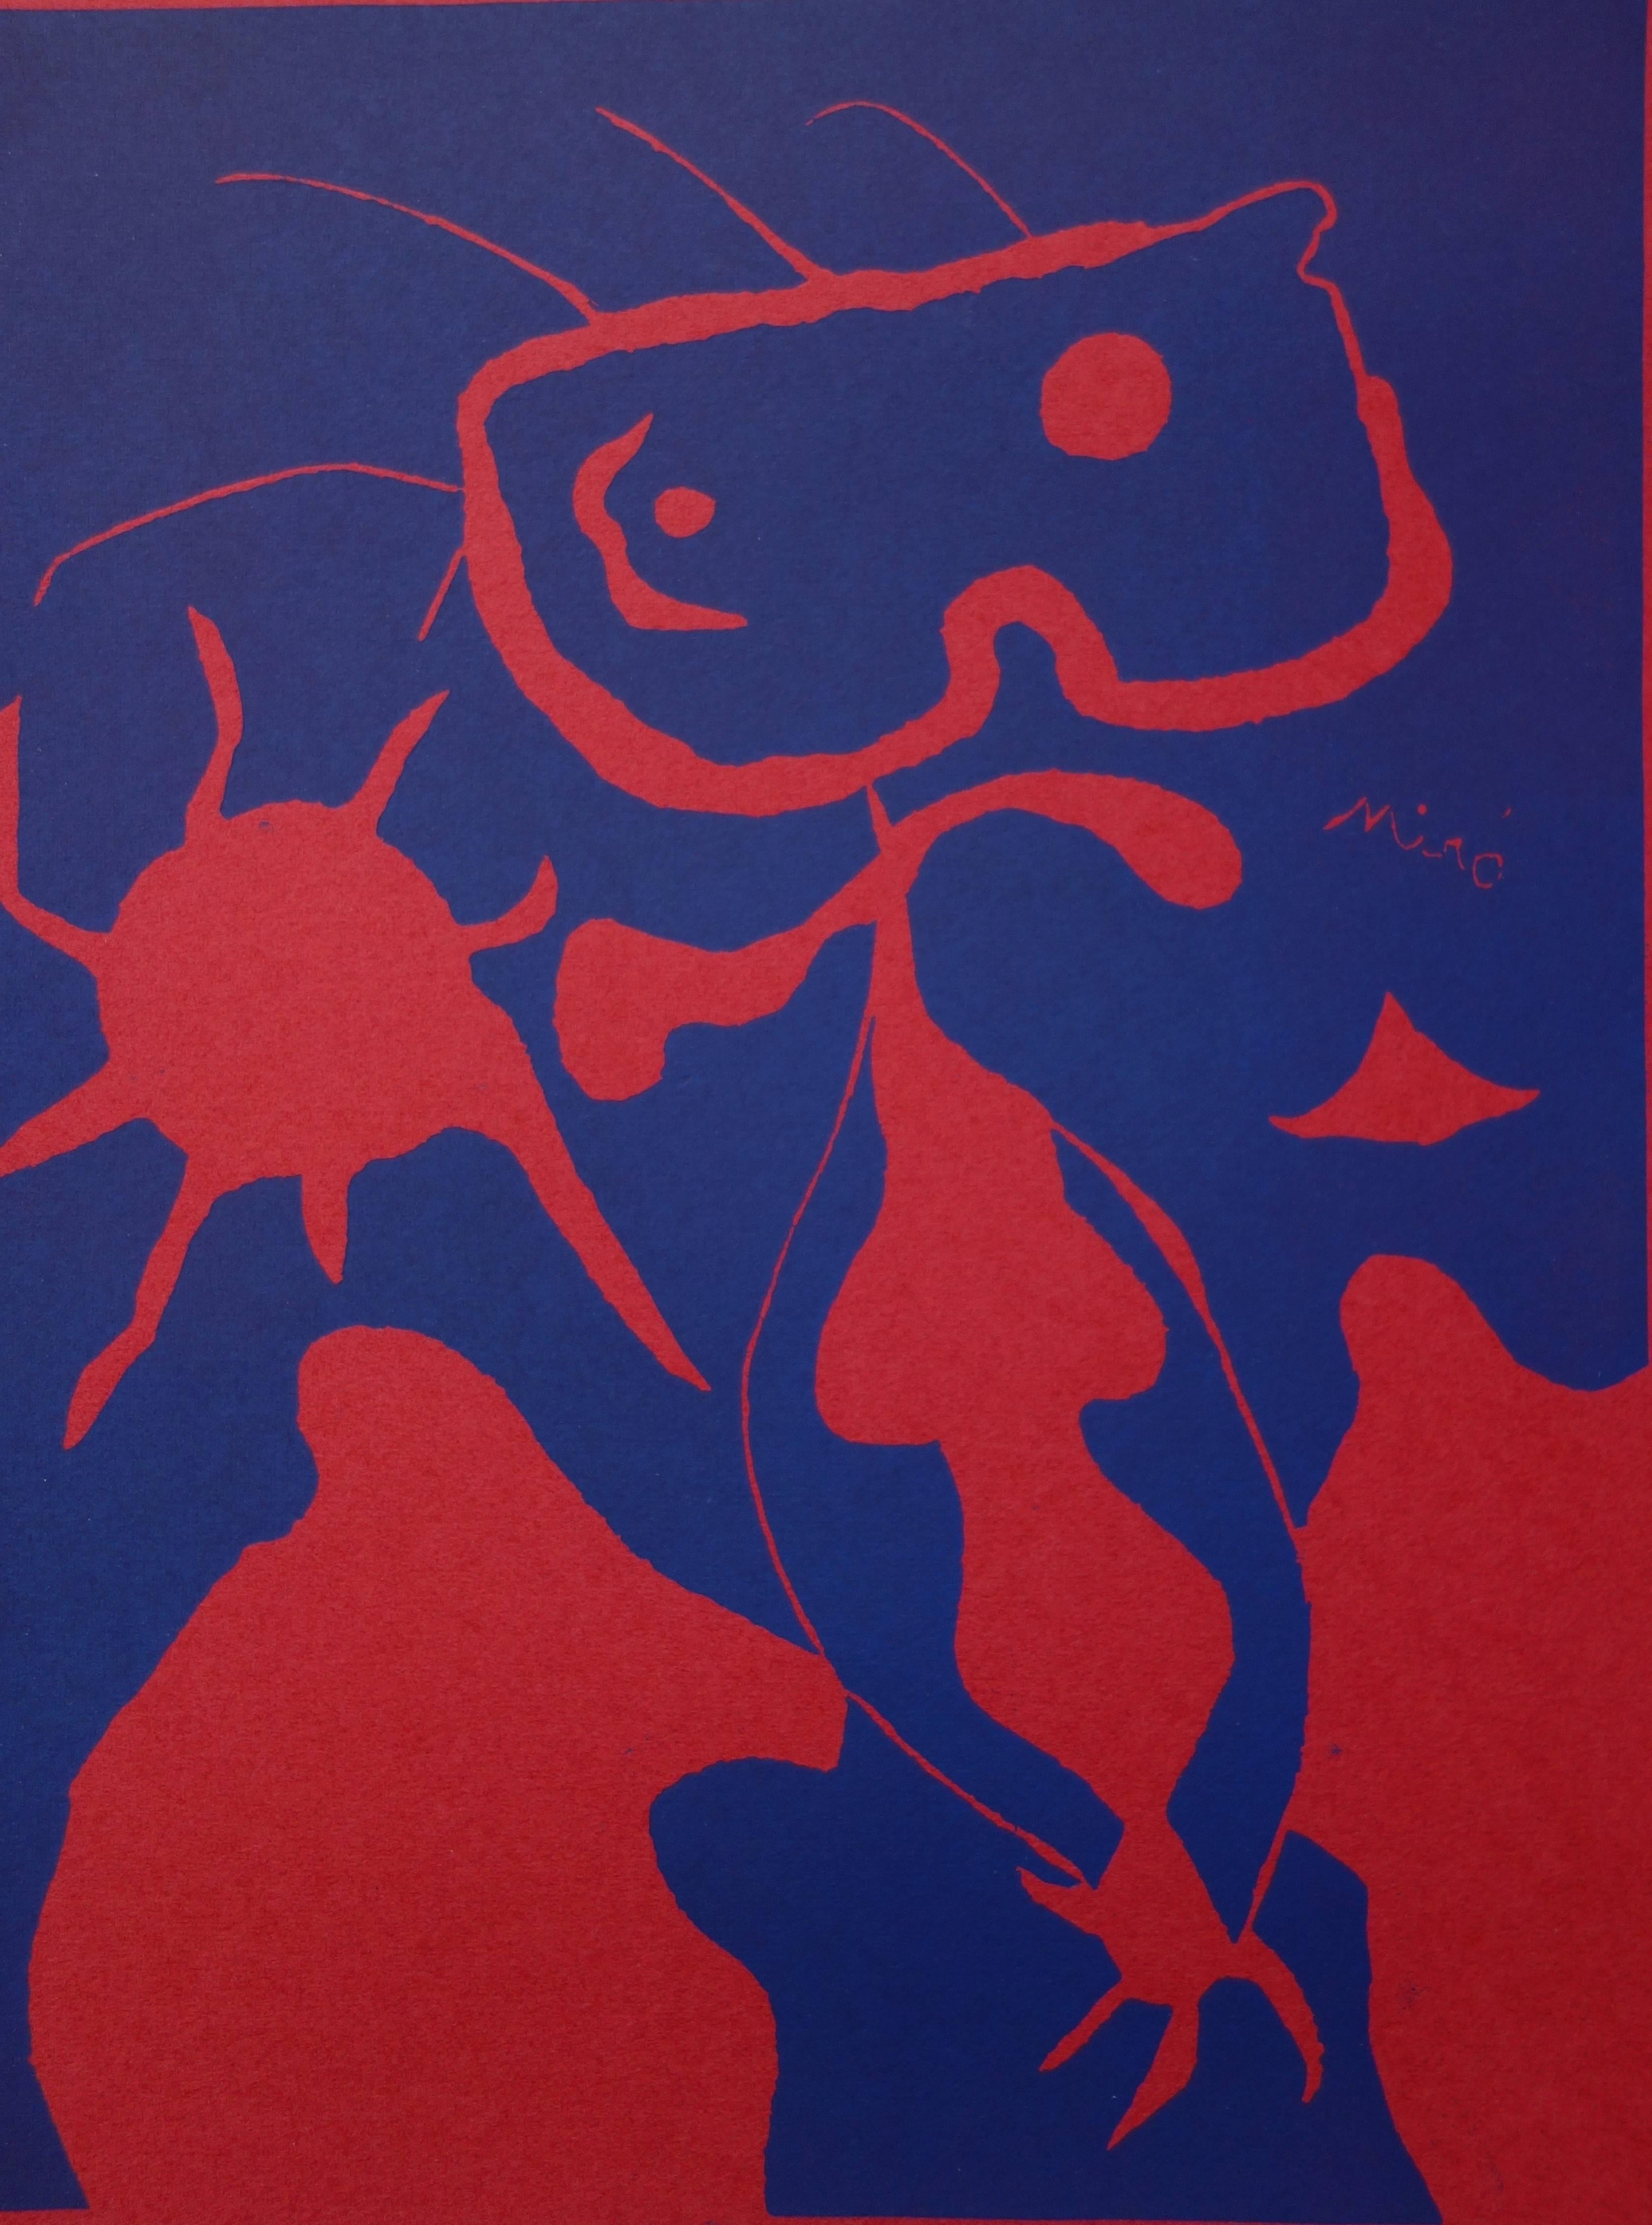 Boy with Red Sun - Original linocut - 1938 - Surrealist Print by Joan Miró